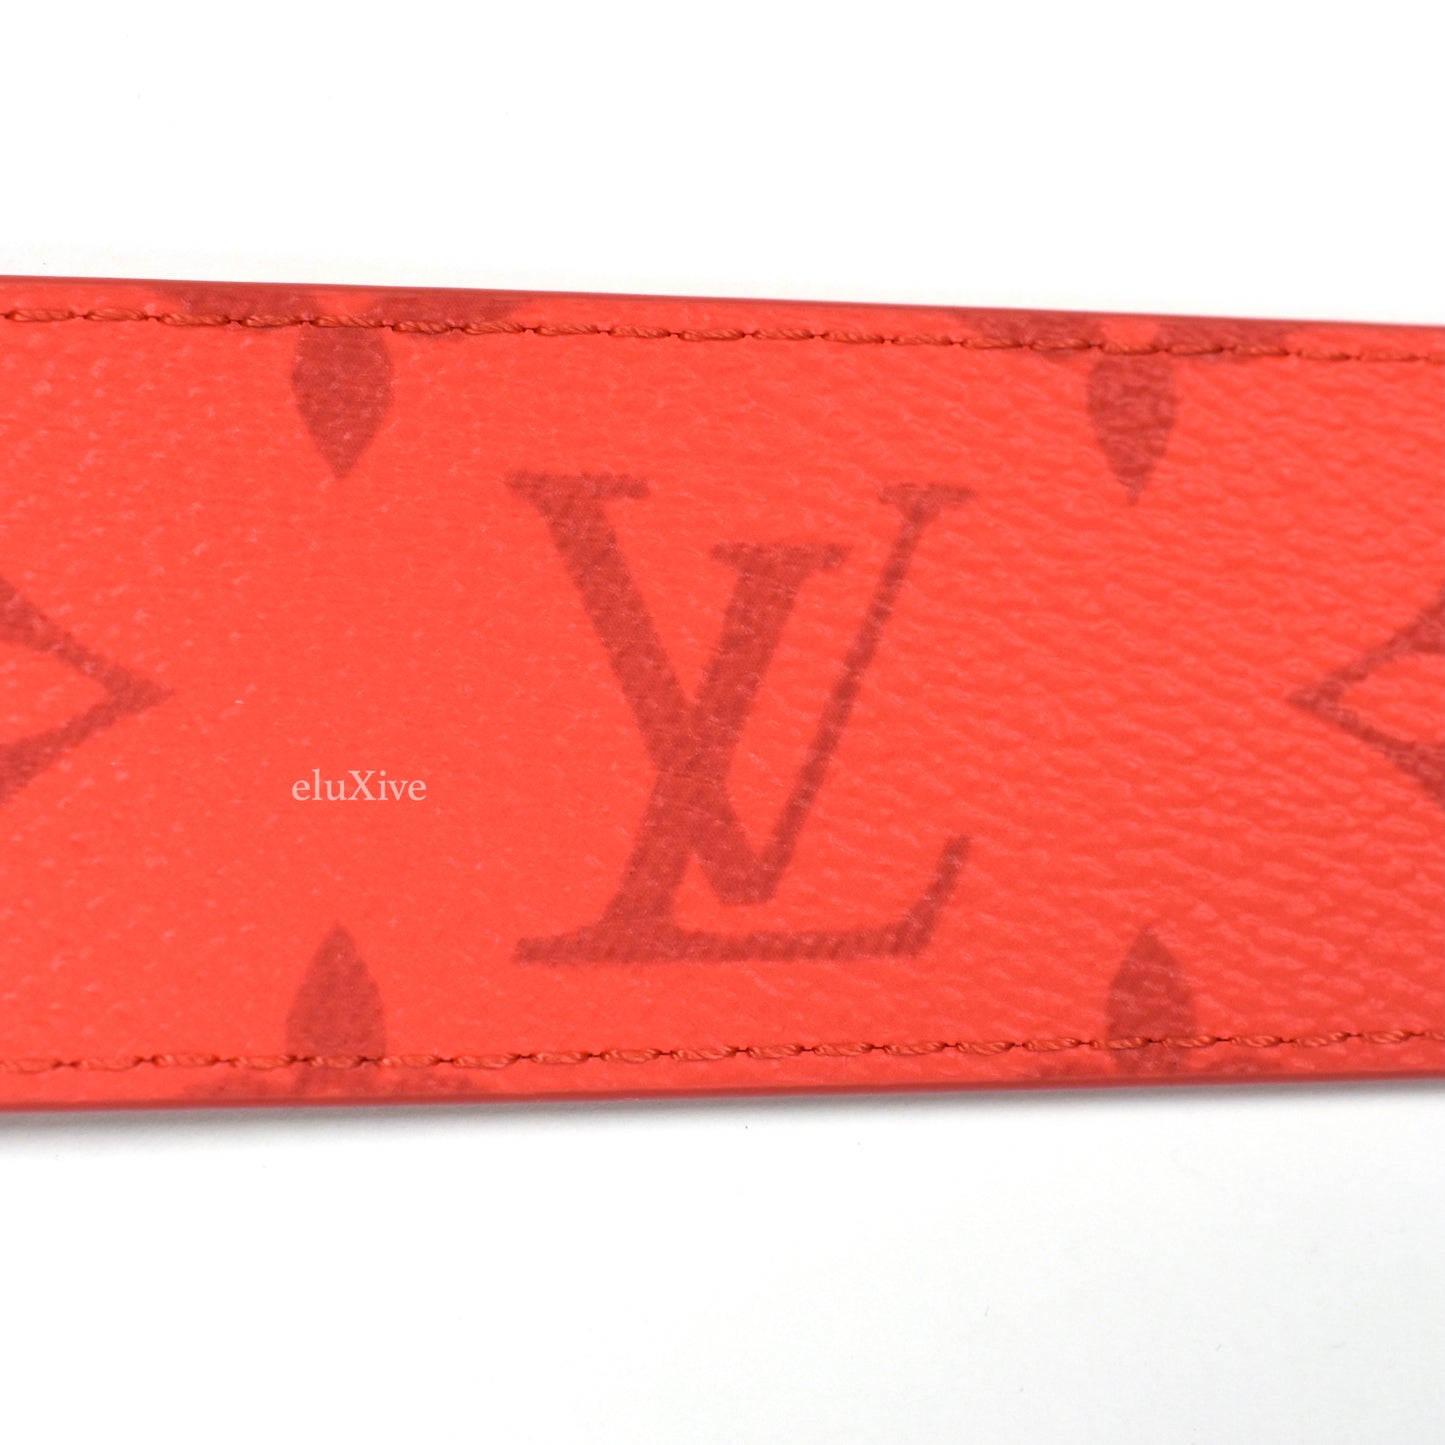 Louis Vuitton - Red Monogram LV Initiales Logo Buckle Belt